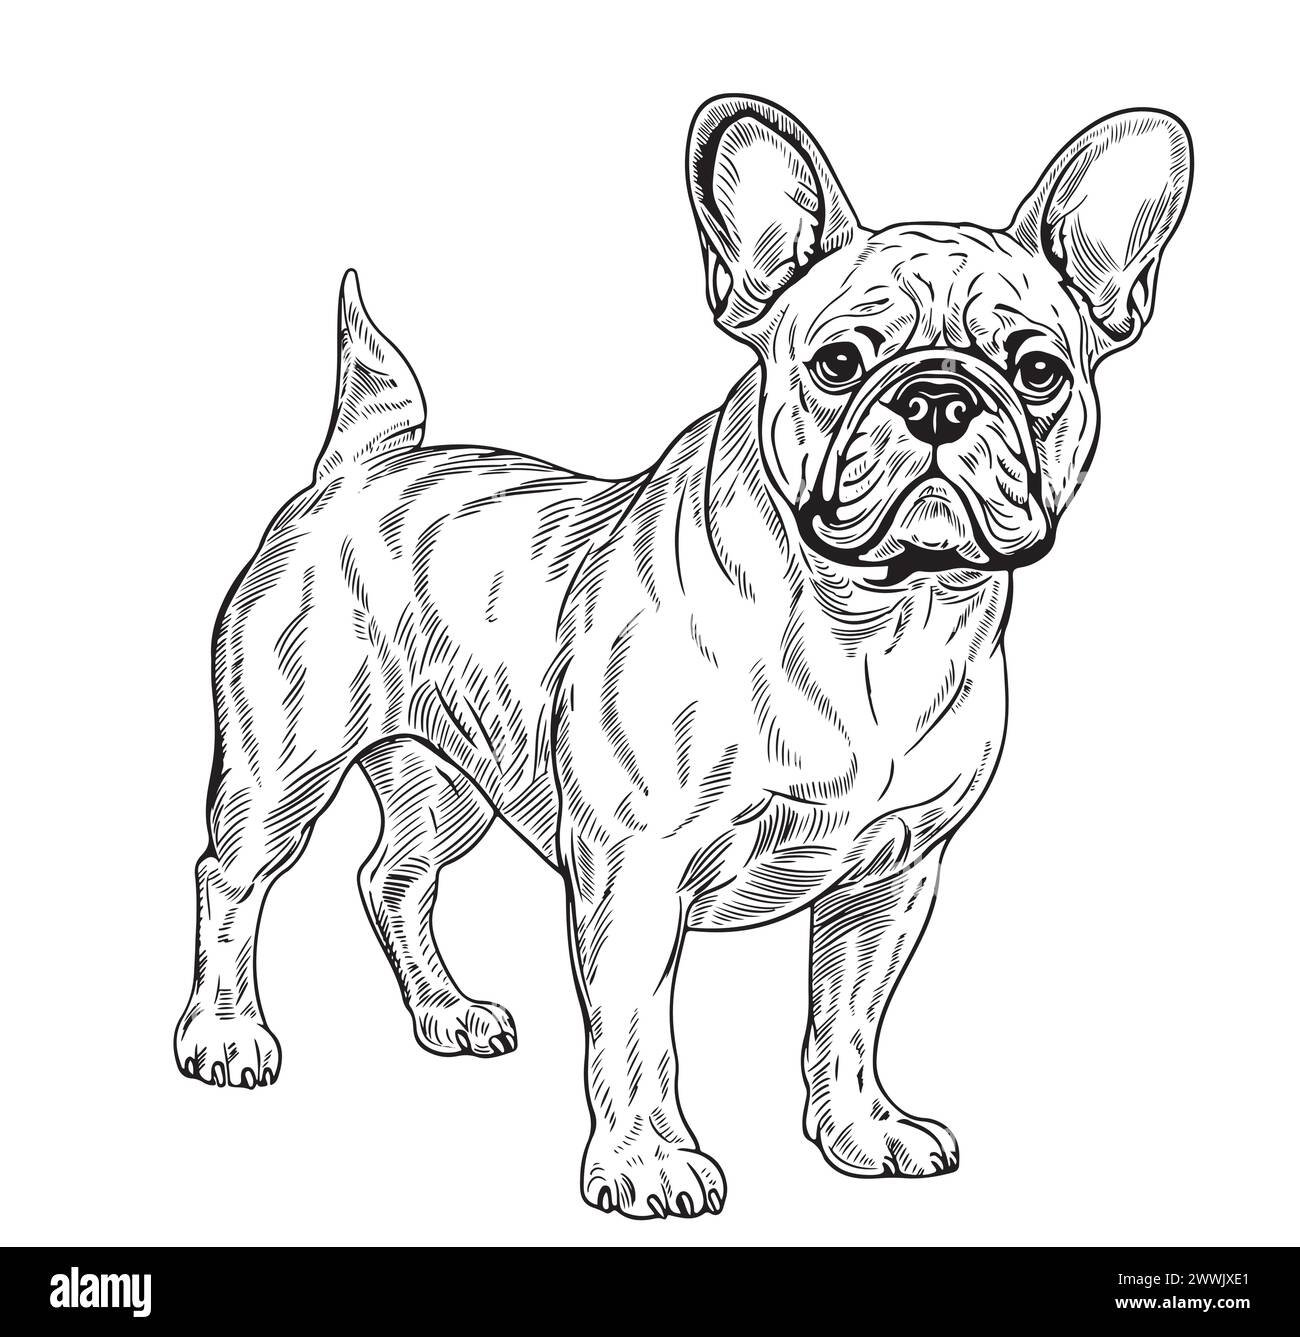 Bulldog francese - disegnato a mano. Illustrazione vettoriale. Illustrazione Vettoriale